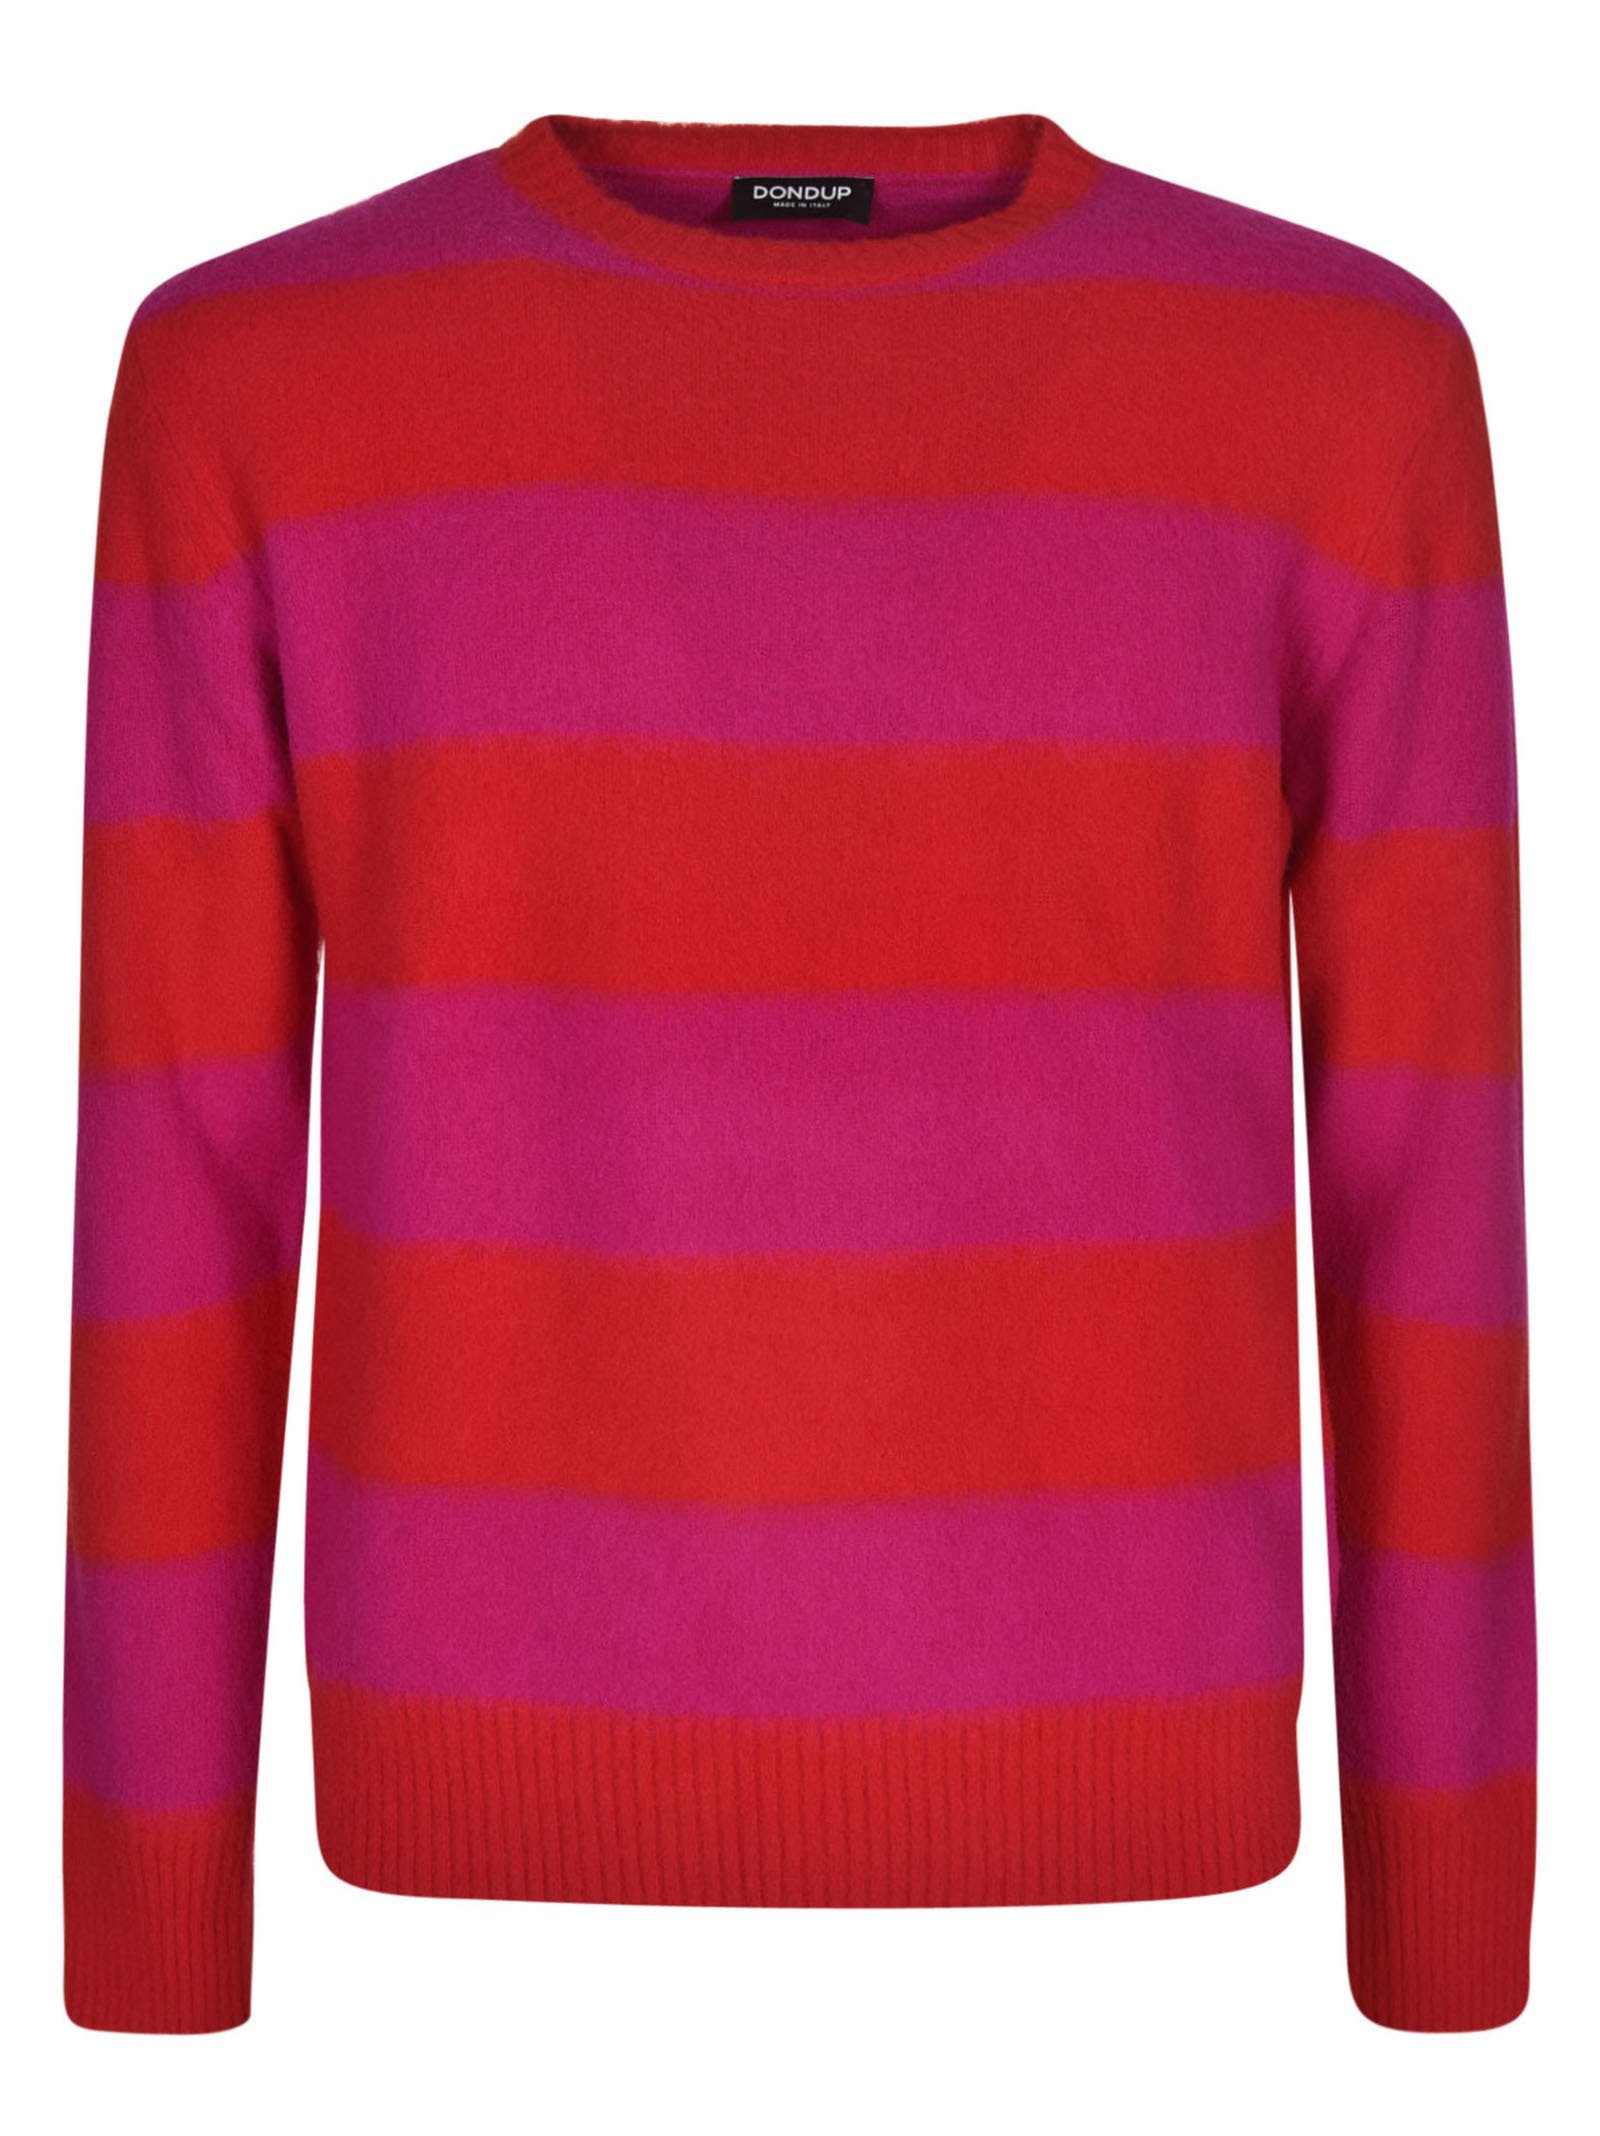 Dondup Stripe Patterned Rib Sweater